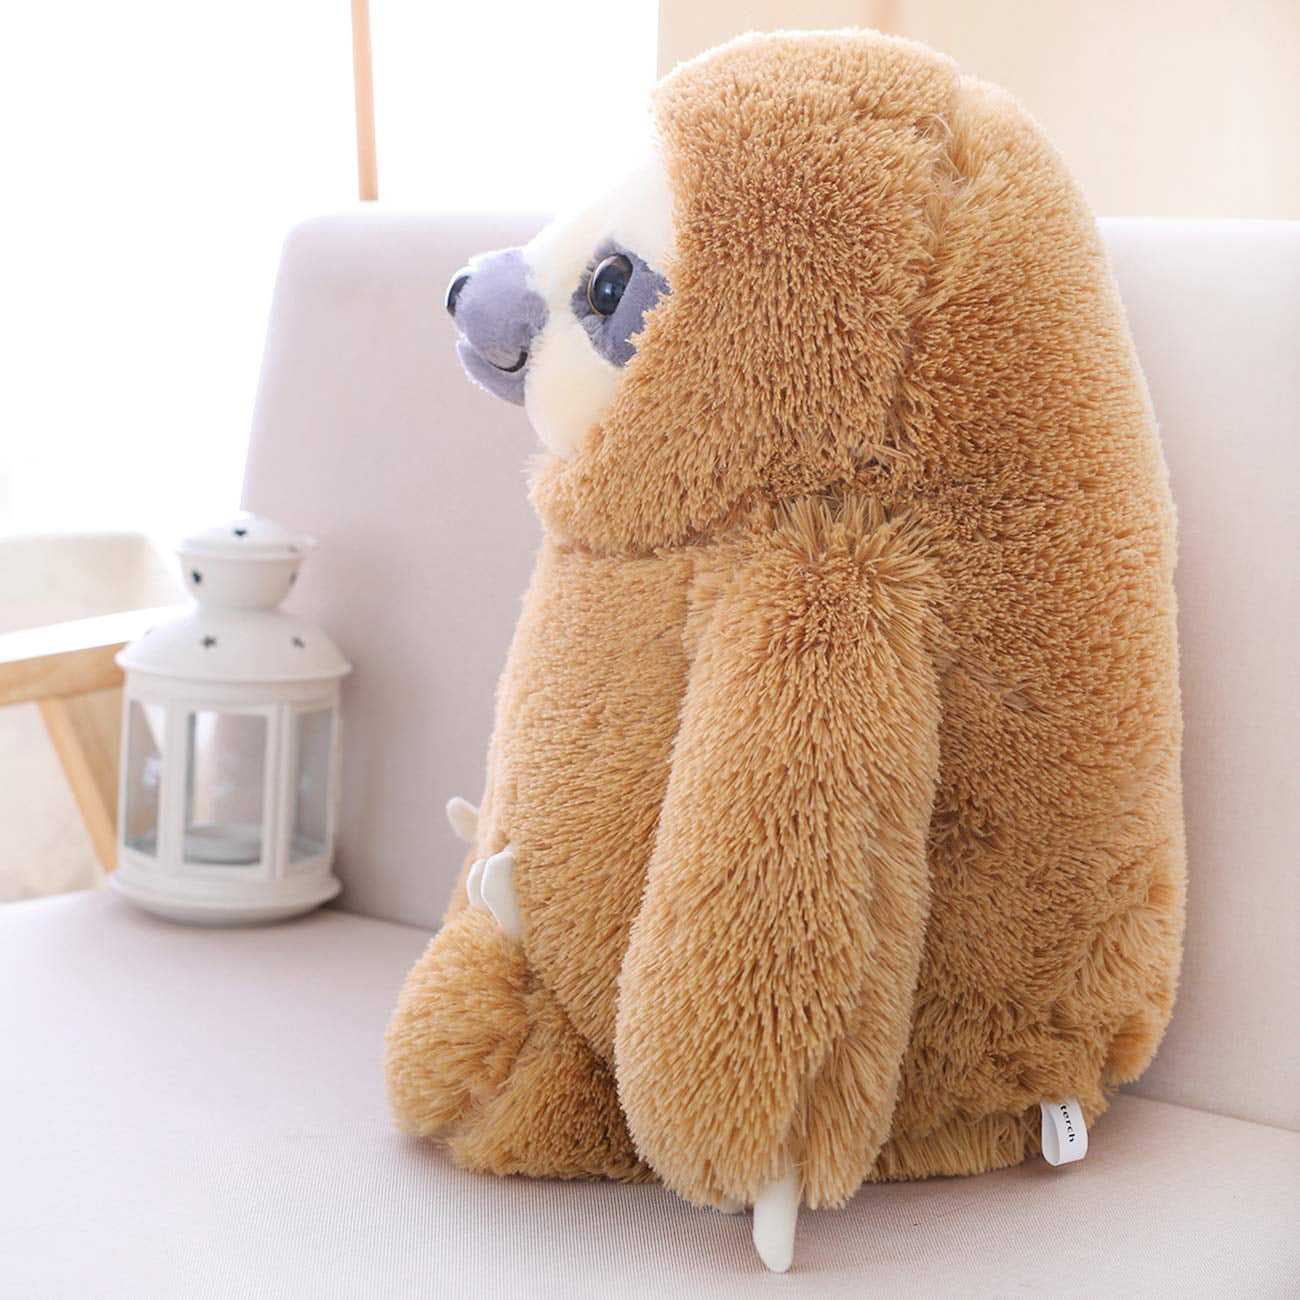 12 Inches Cute Soft Plush Three Toed Sloth Stuffed Animal Toy Xmas Kids Gift UK 